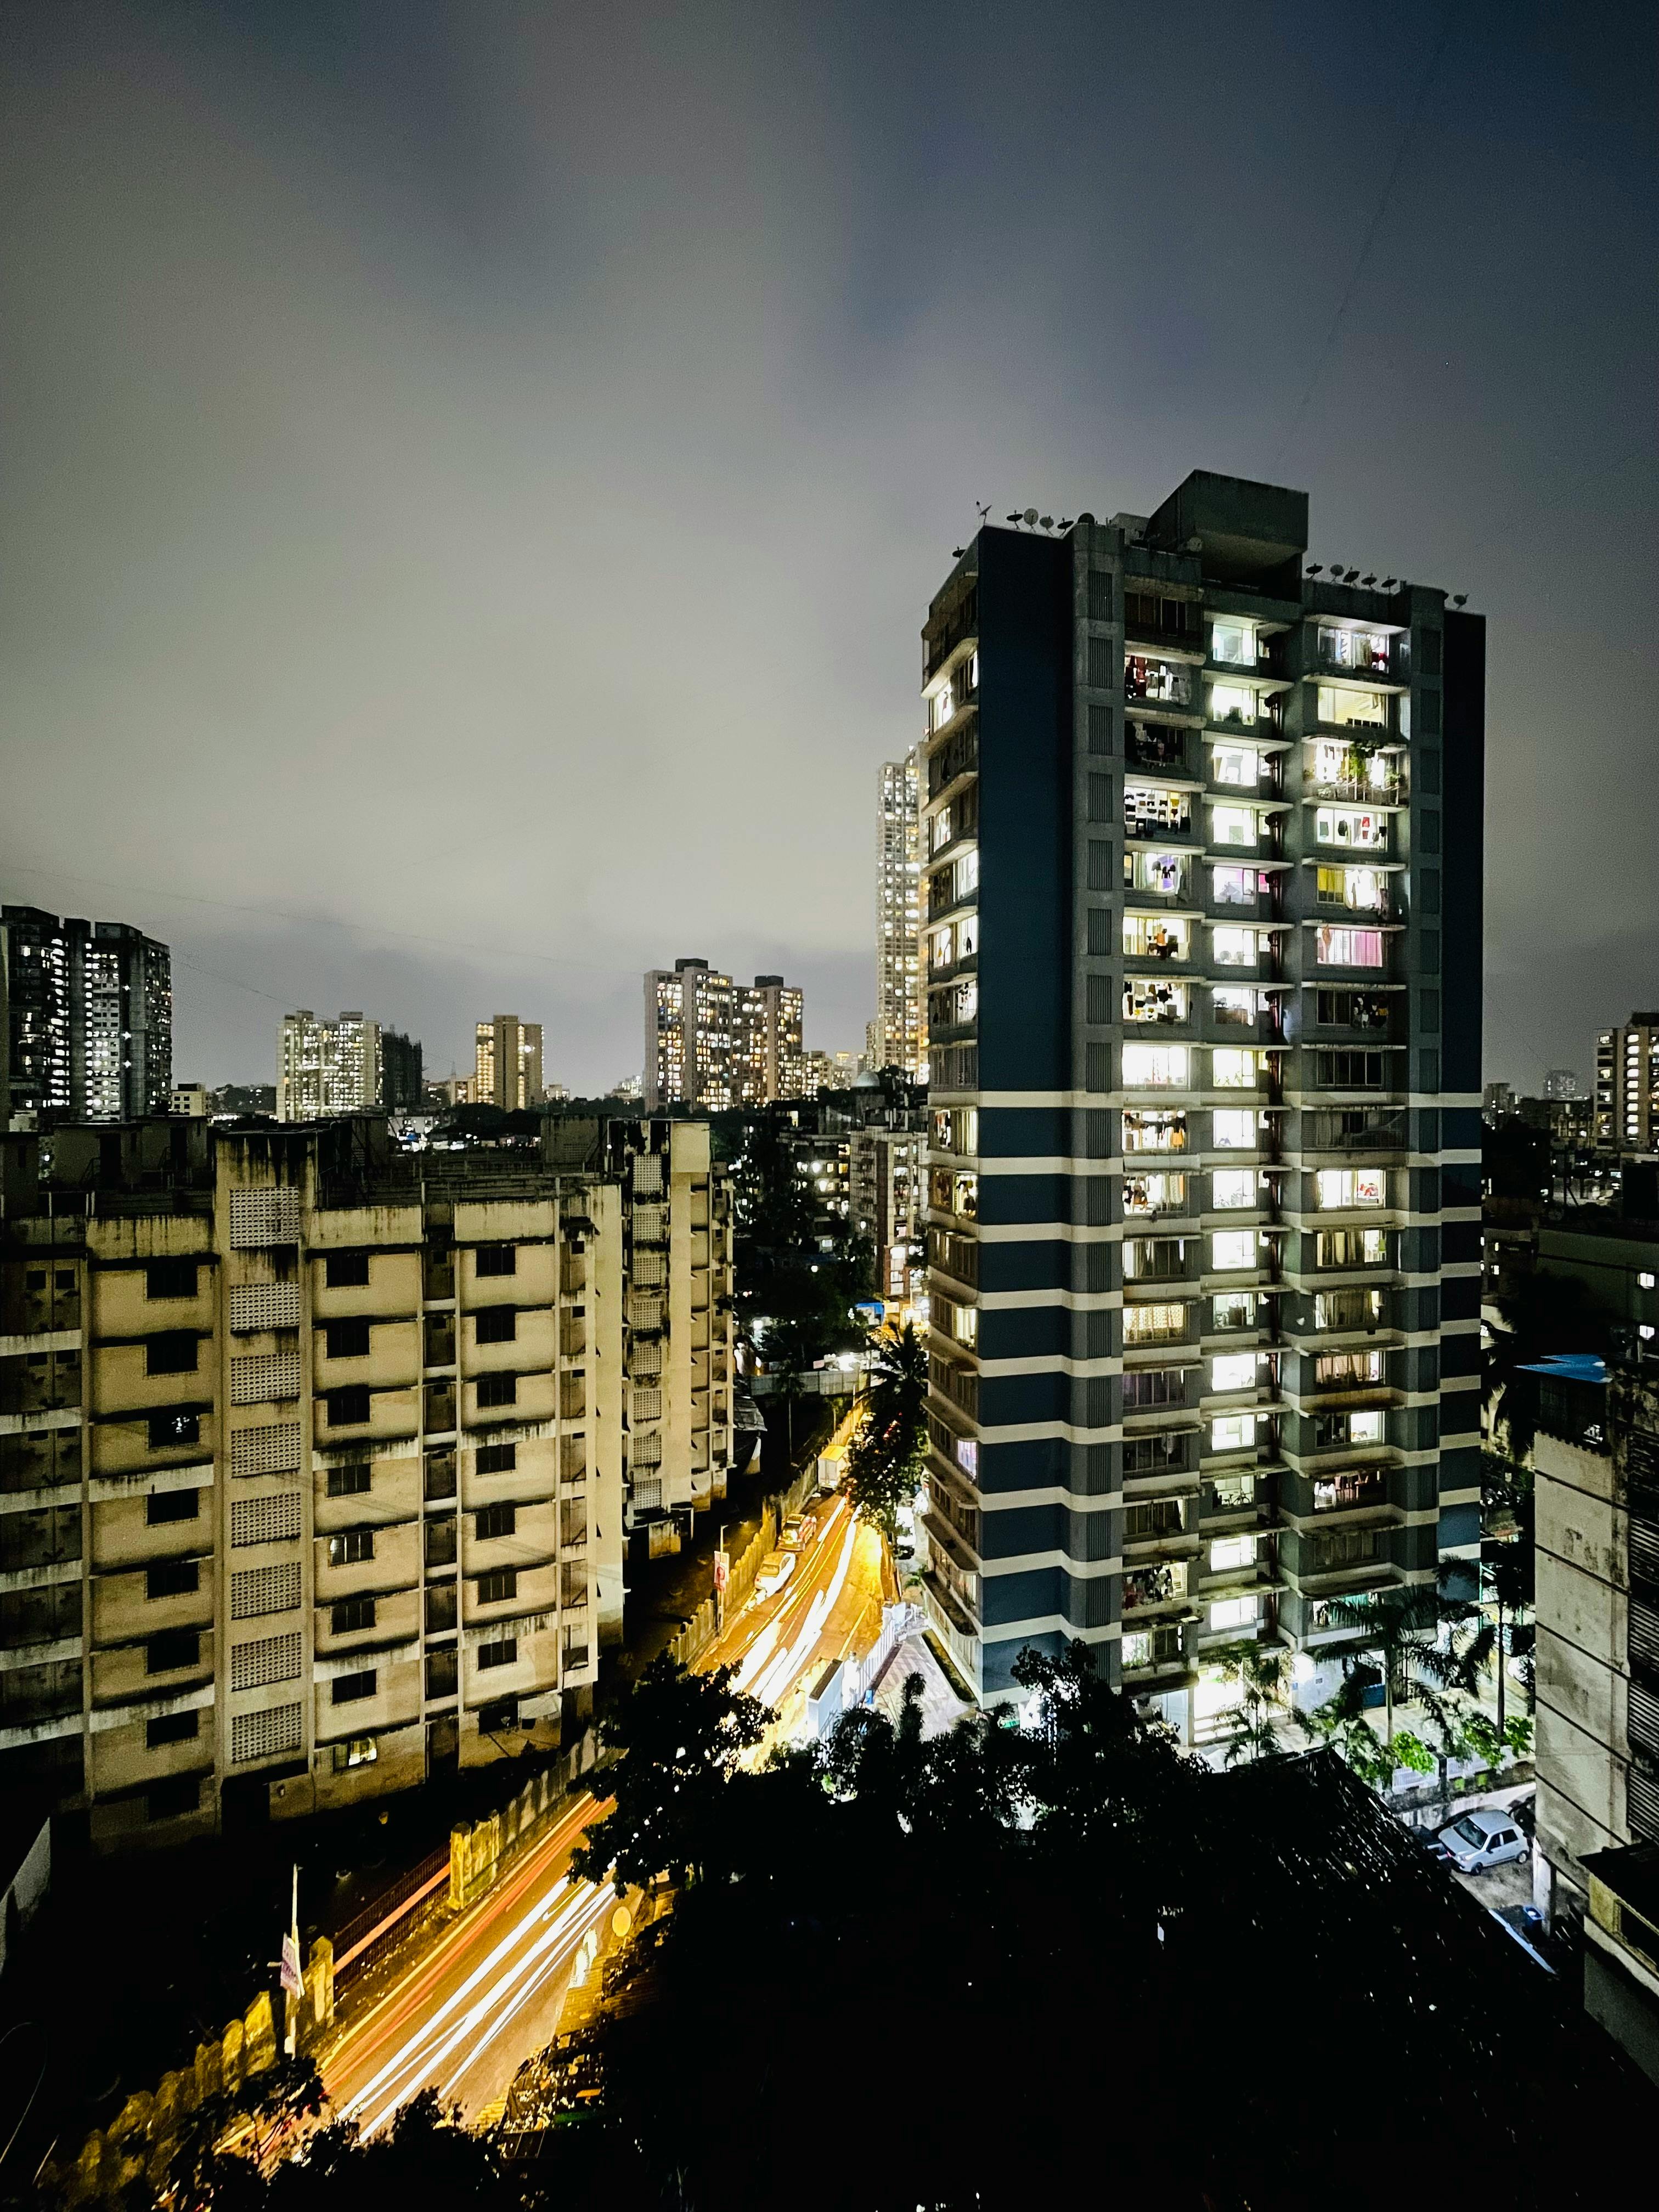 478 Mumbai City Wallpaper Images, Stock Photos & Vectors | Shutterstock